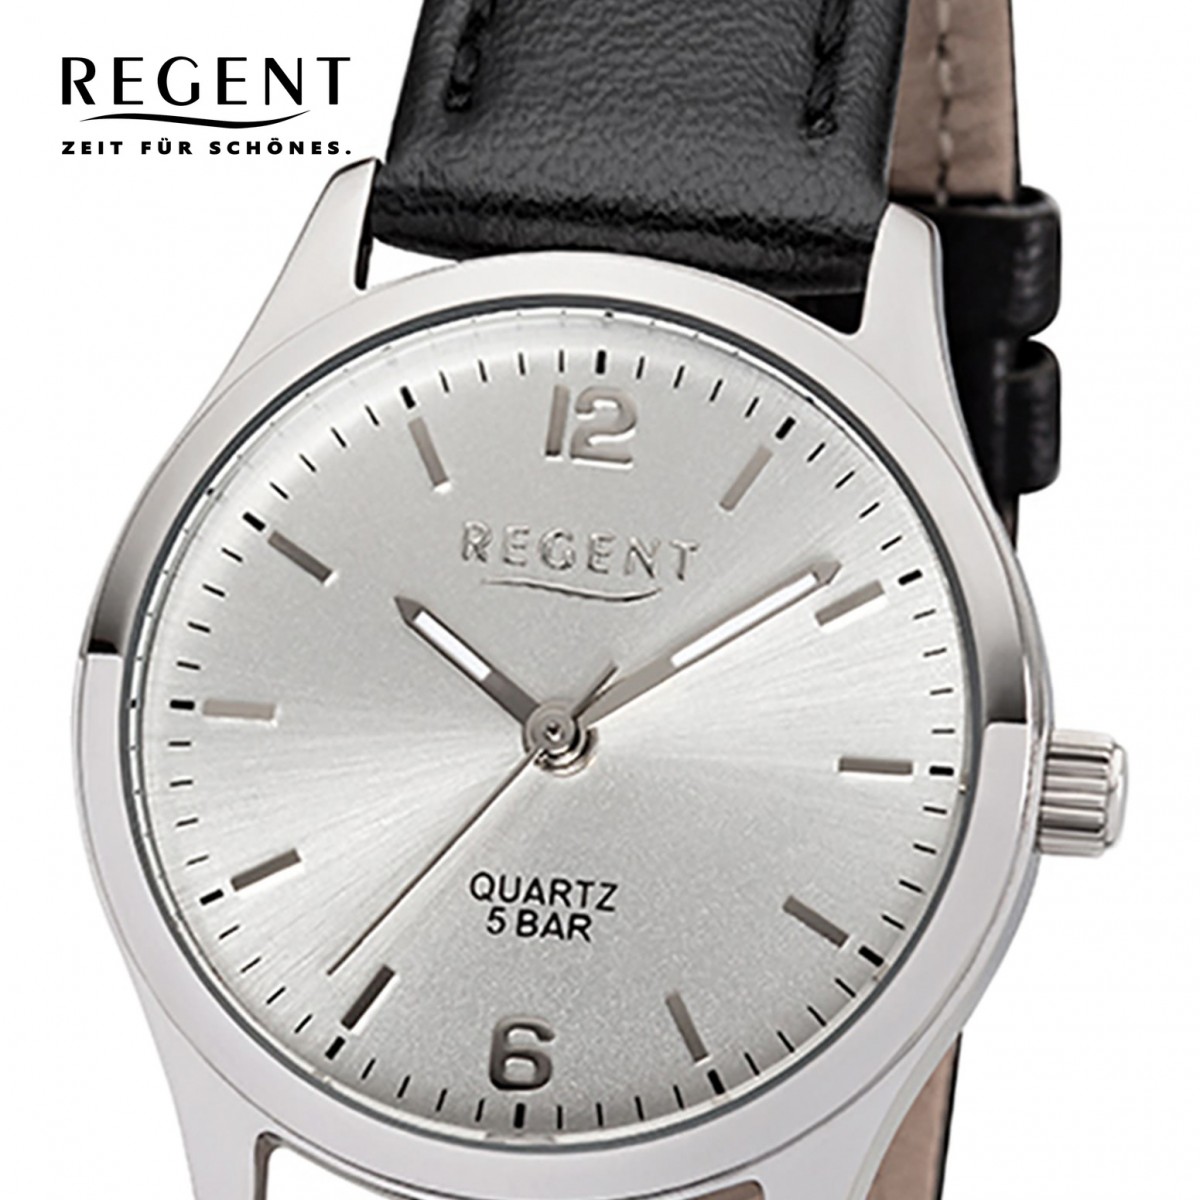 Regent Damen-Armbanduhr 32-2113415 schwarz UR2113415 Leder-Armband Quarz-Uhr